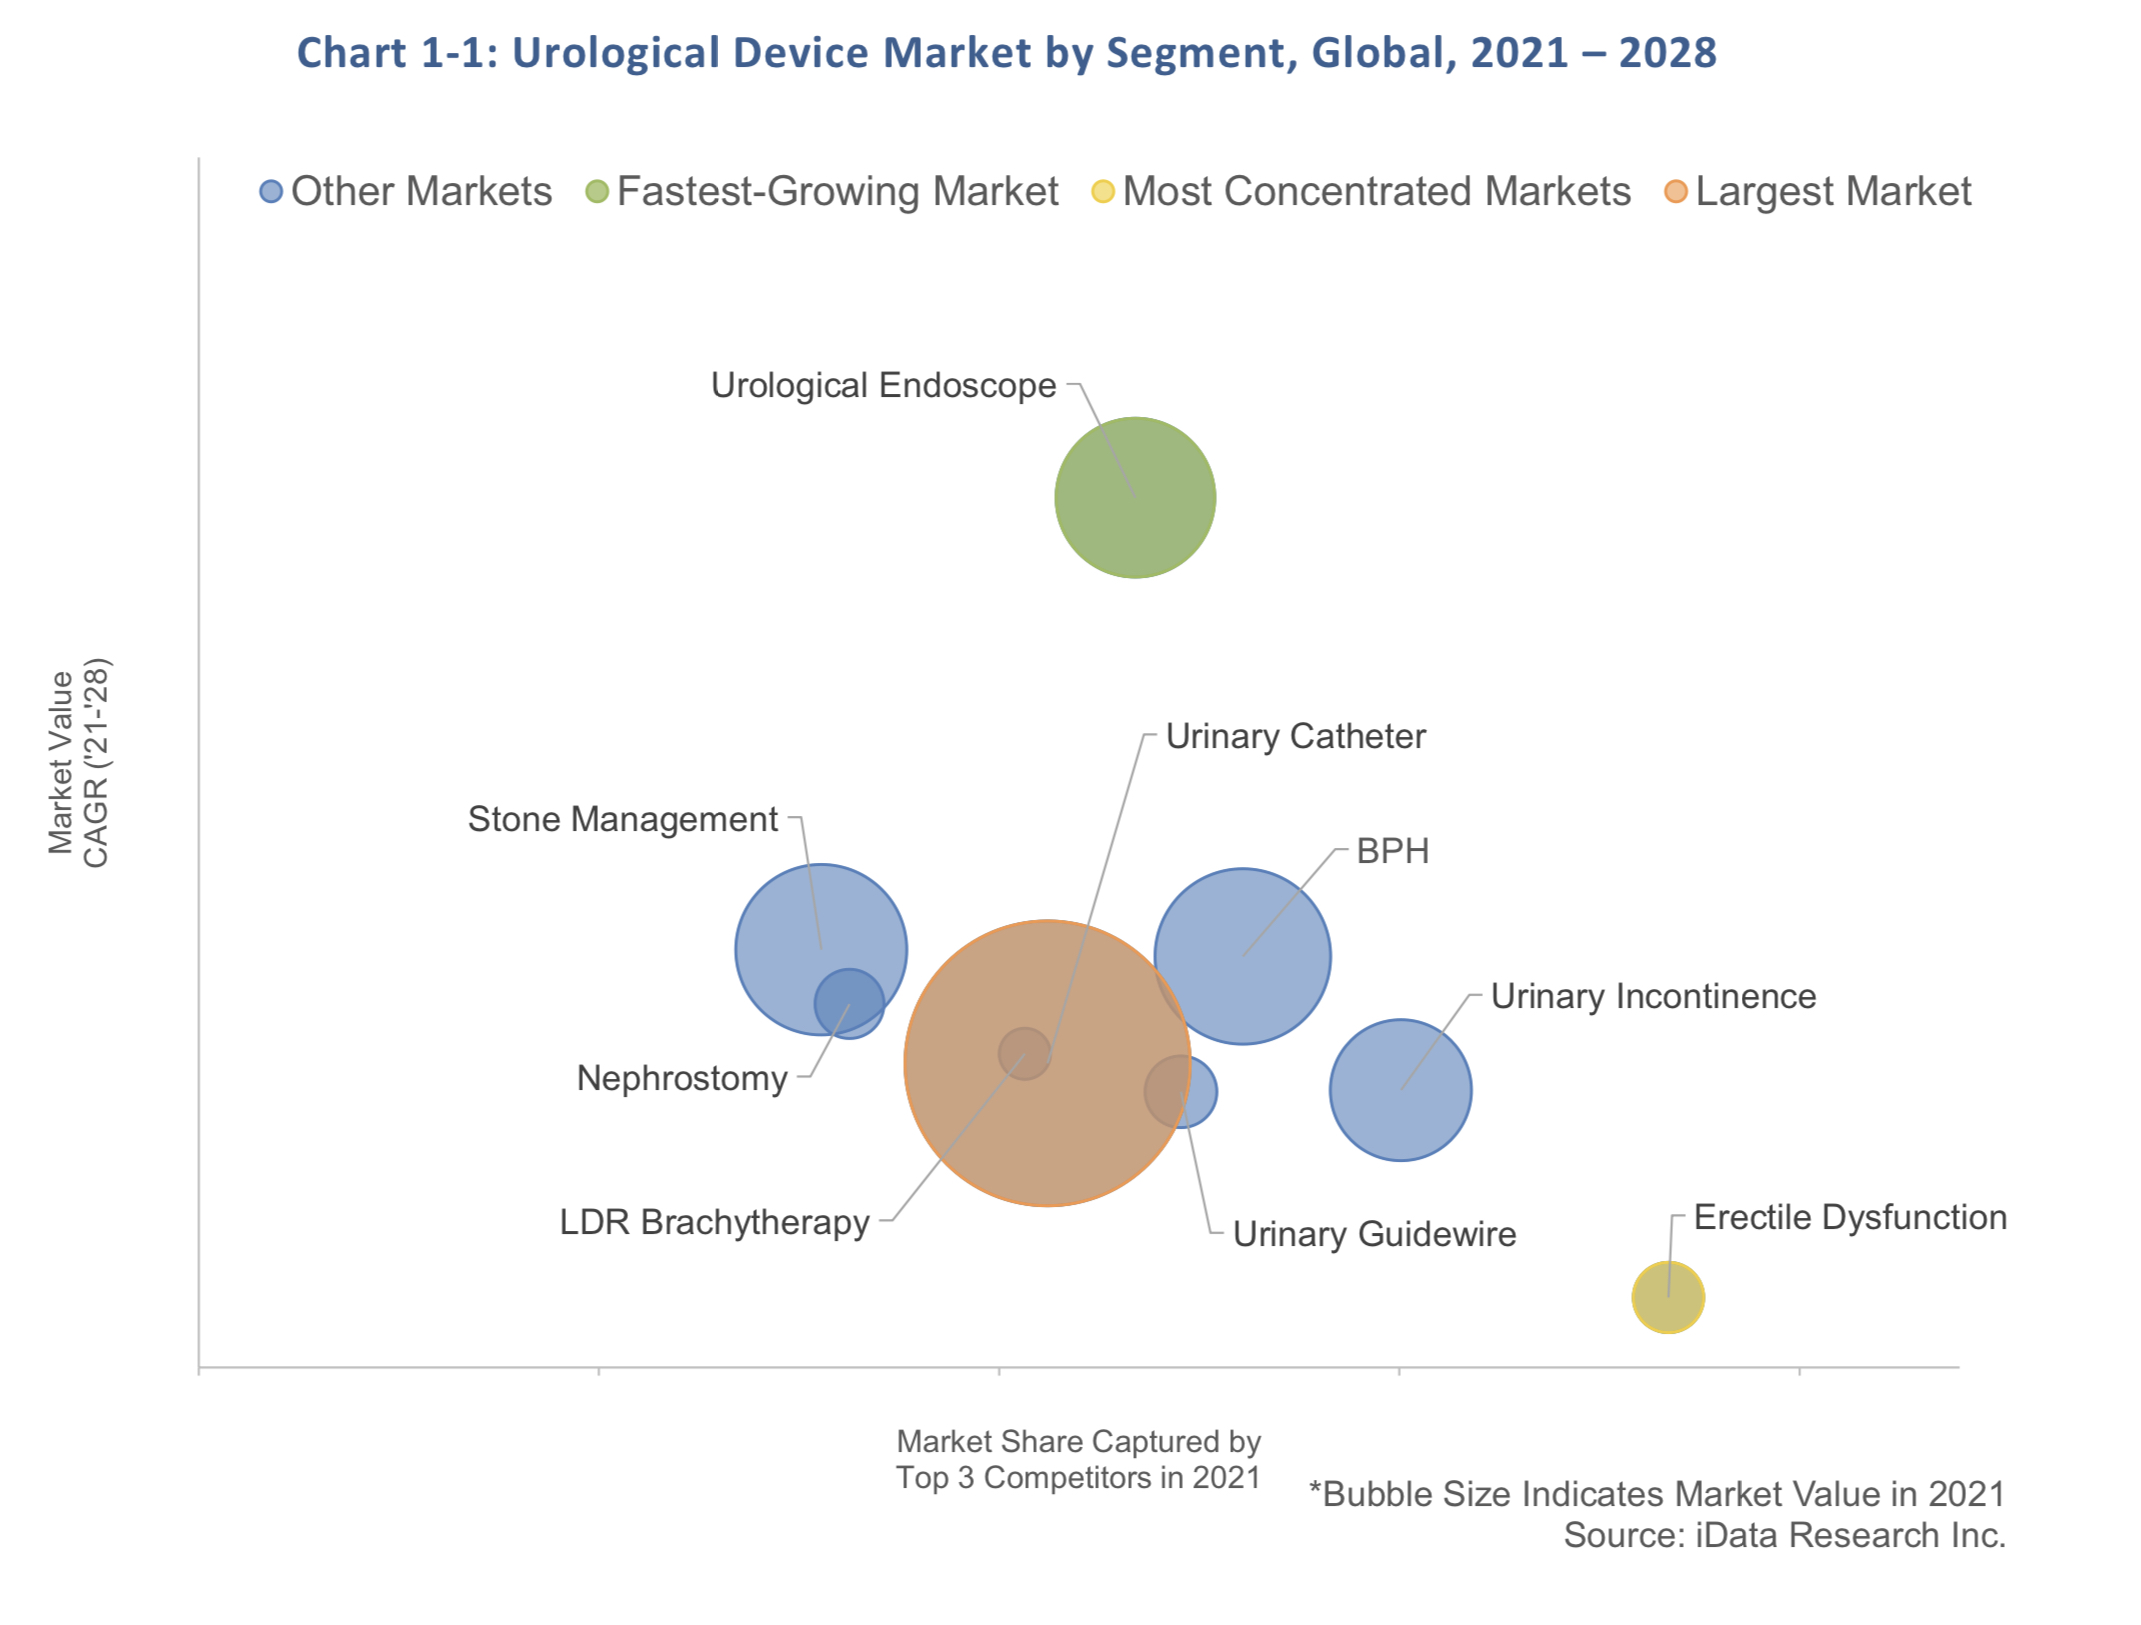 Global urological devices market